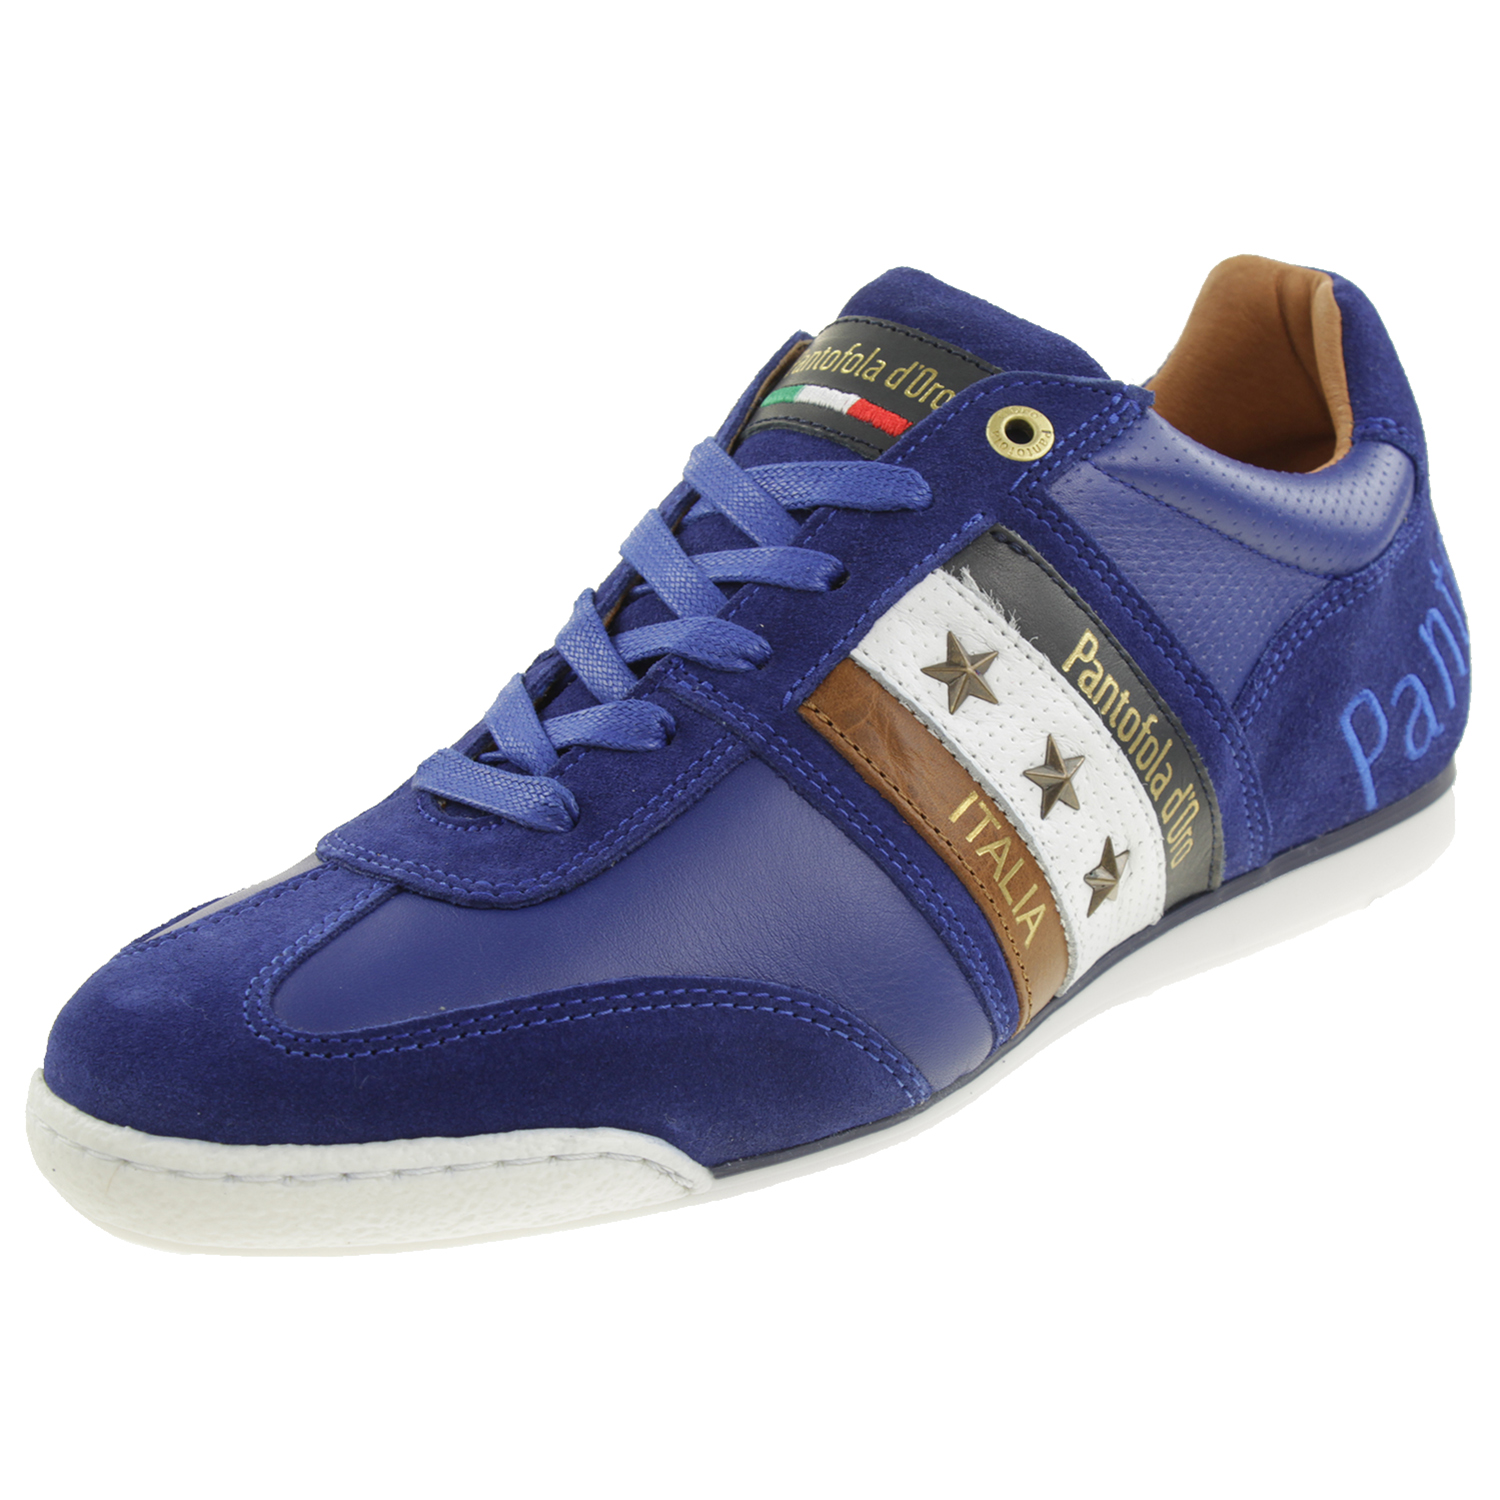 Pantofola d' Oro IMOLA COLORE UOMO LOW Herren Leder Sneaker 10213040 Blau 